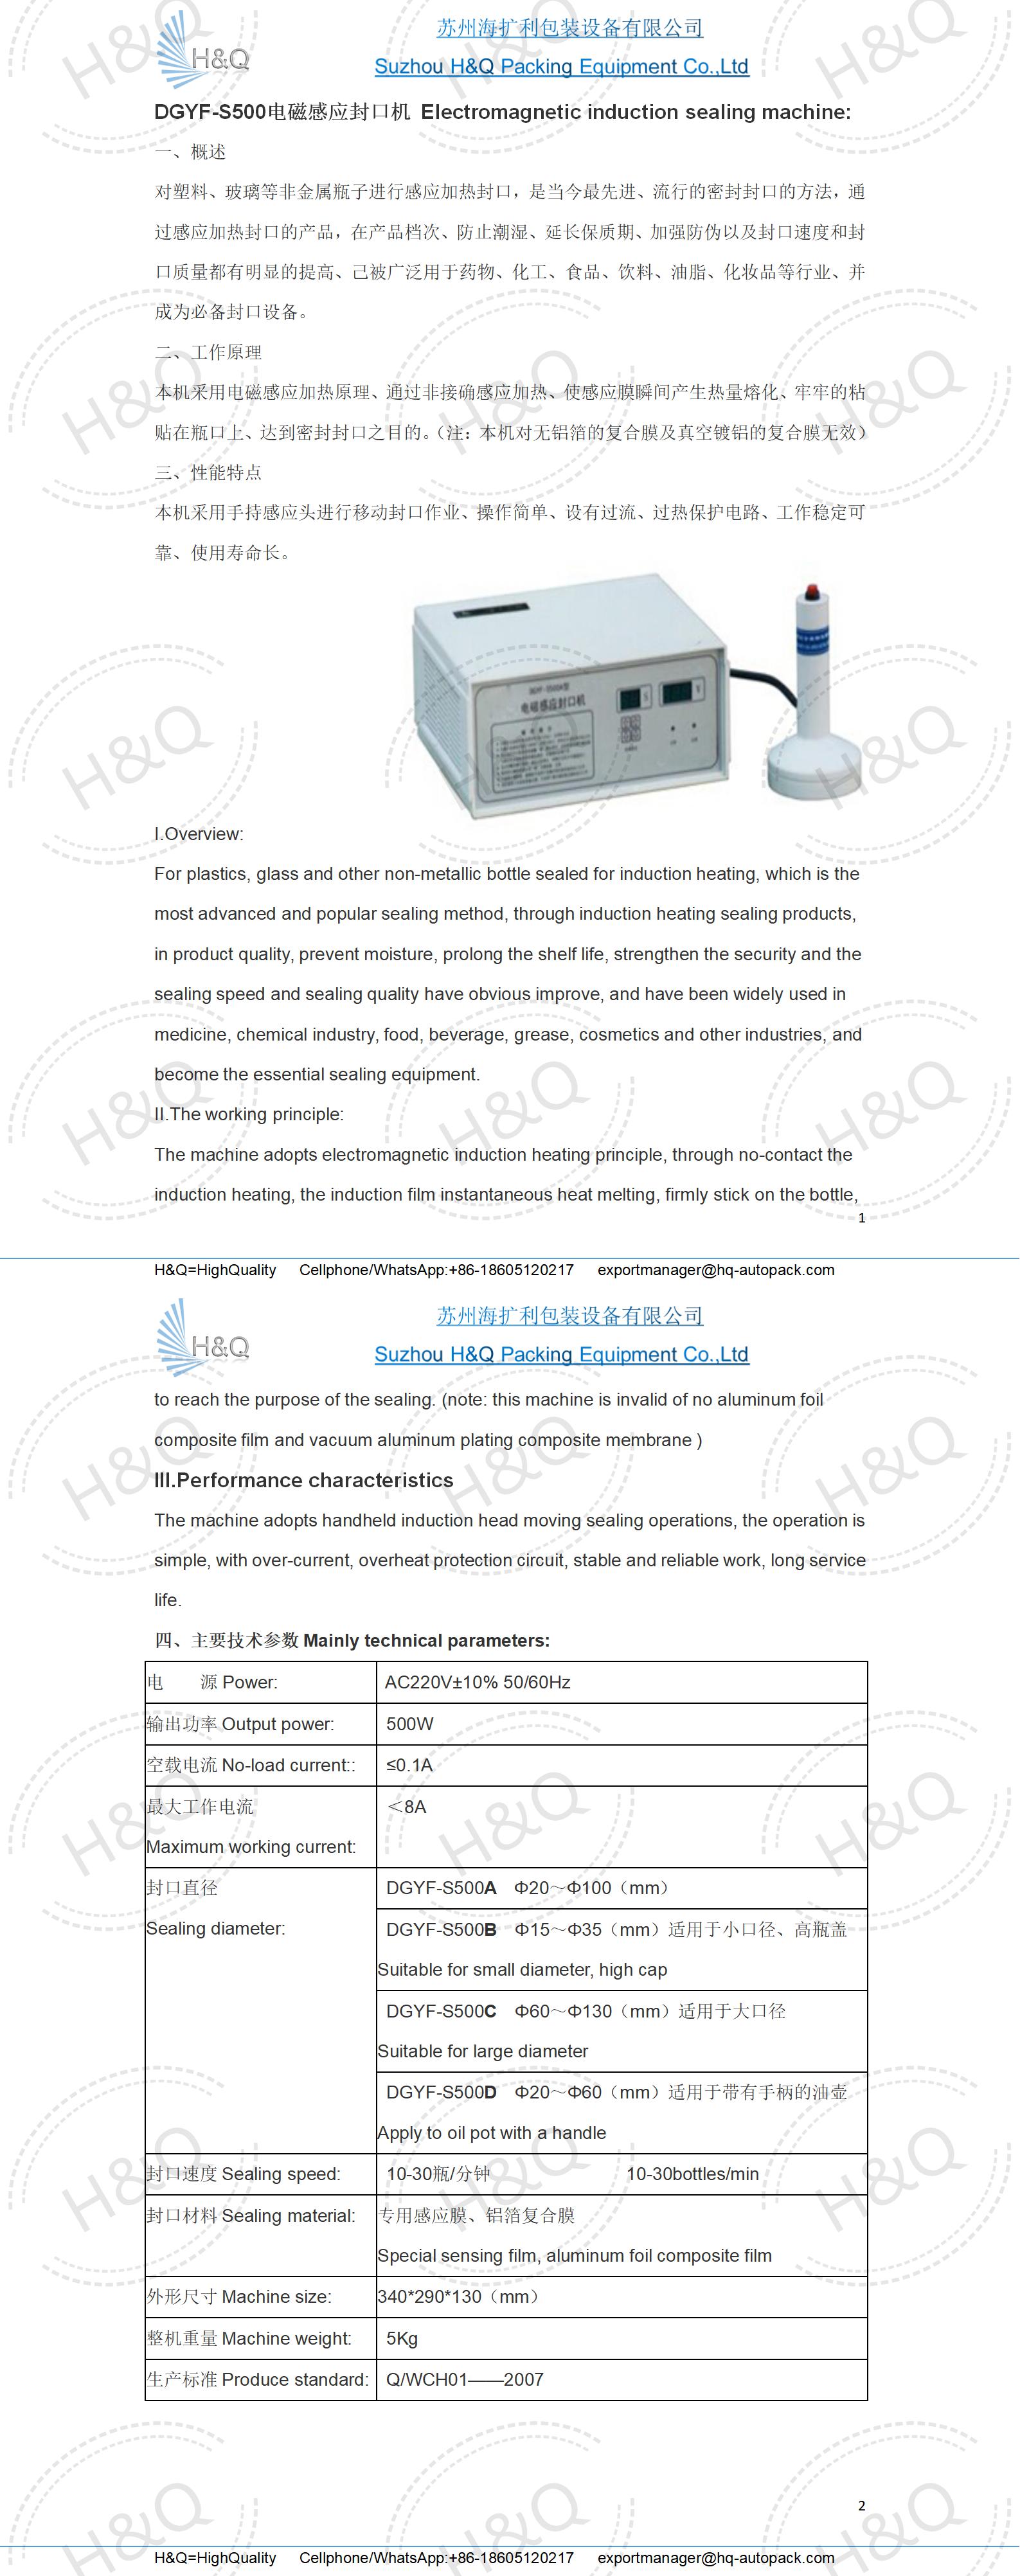 DGYF-S500电磁感应封口机 Electromagnetic induction sealing machine.jpg